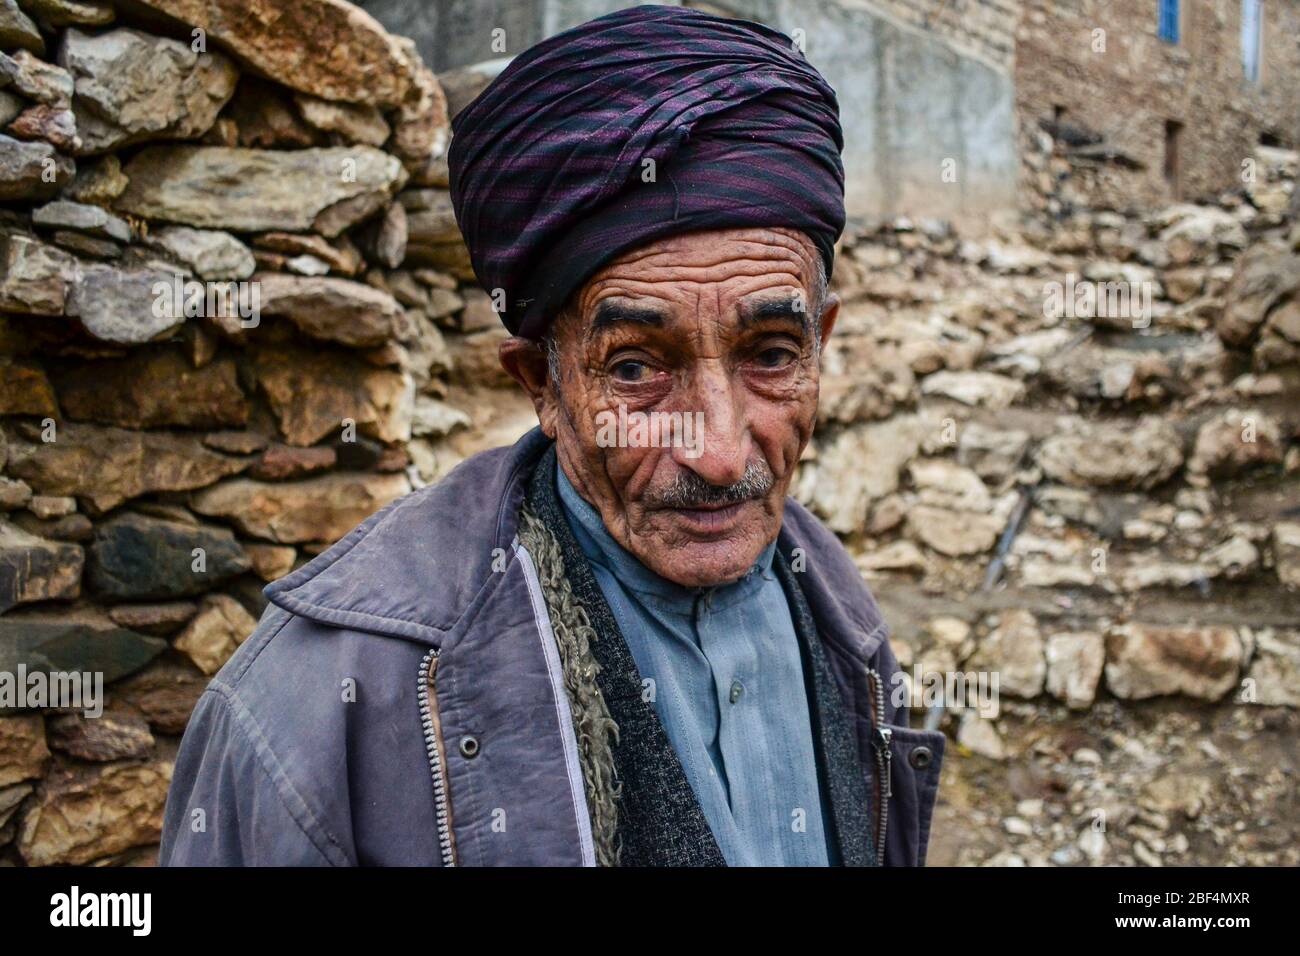 Palangan Iranian Kurdistan November 15 2013 Portrait Of Old Kurdish Man With Face Full Of